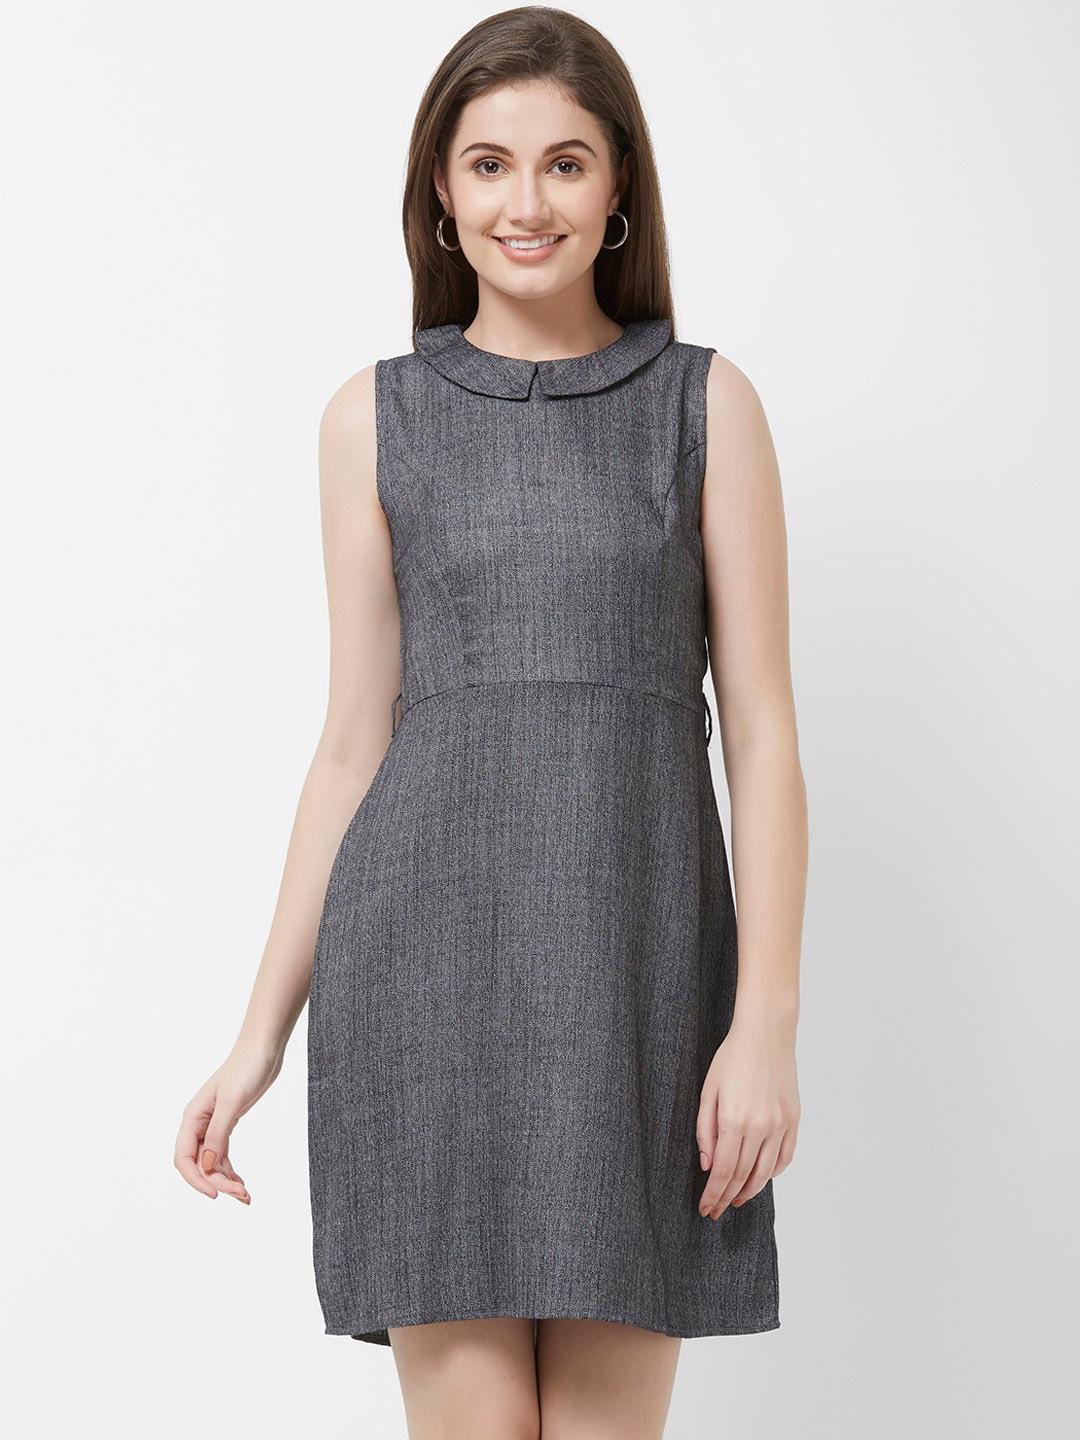 109f women grey solid a-line dress